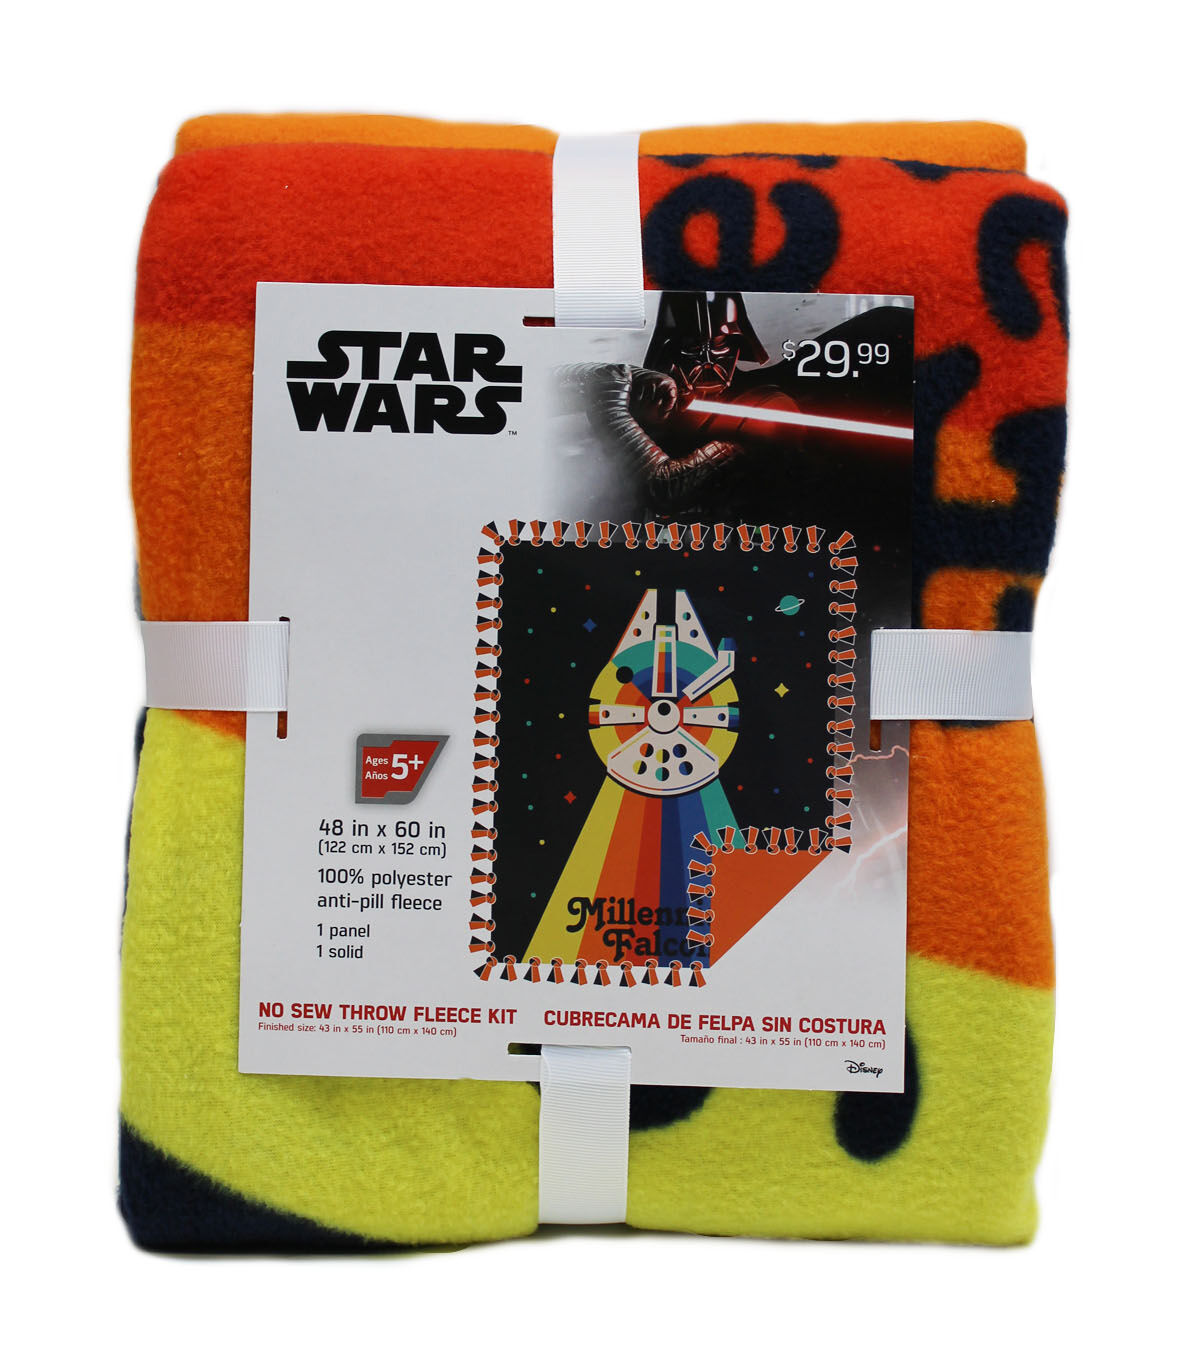 Star Wars Yoda No-Sew Fleece Blanket Kit, 48 x 60 inches